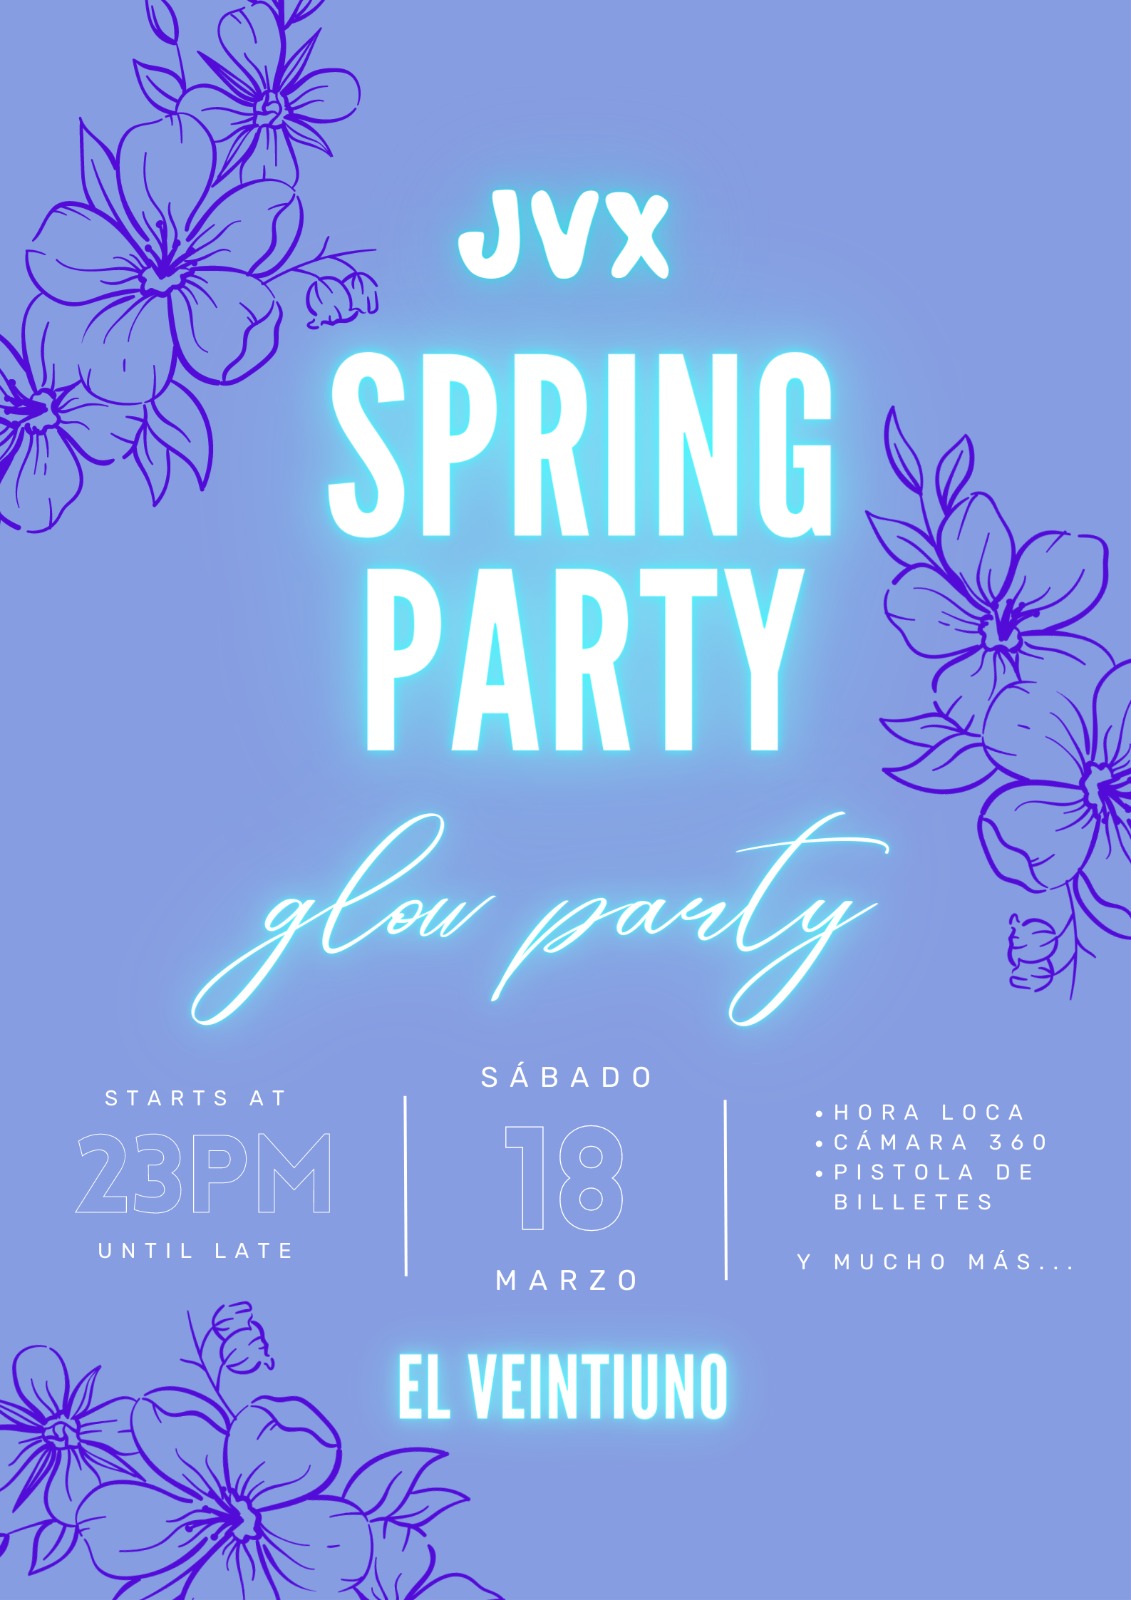 jvx spring party en huesca 16778313784518747